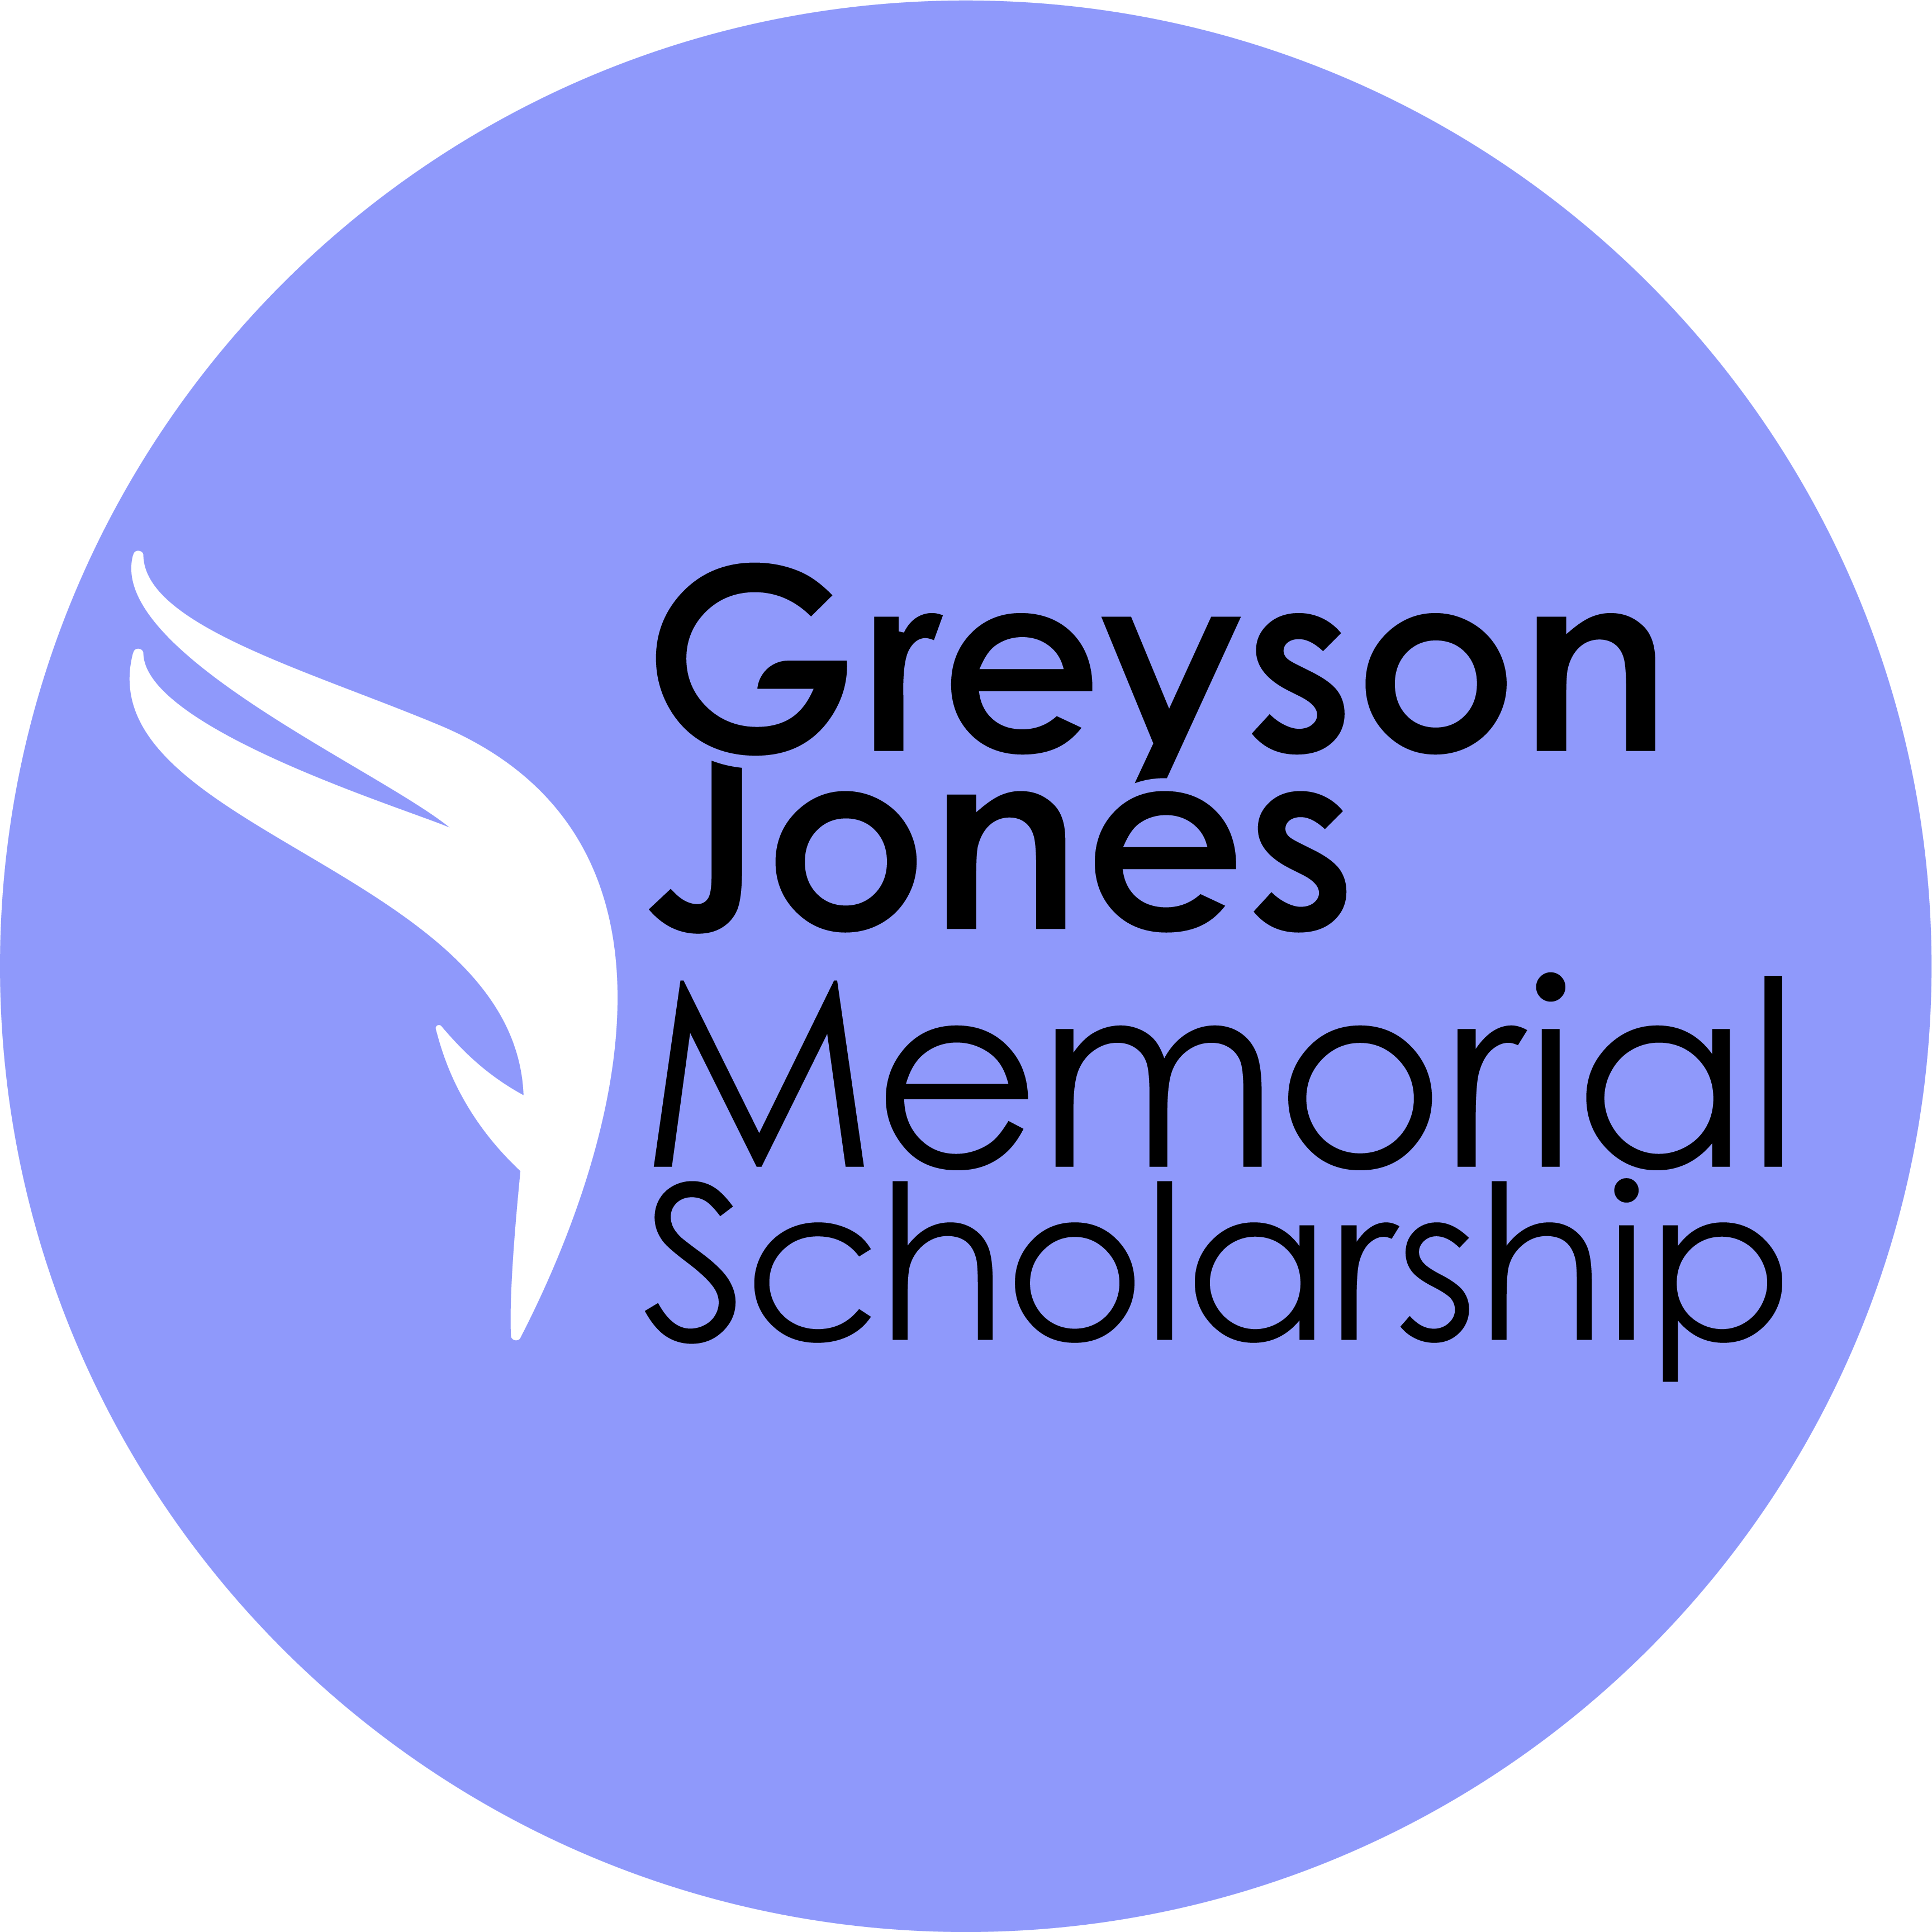 Greyson jones memorial scholarship | fairy godparents london & area